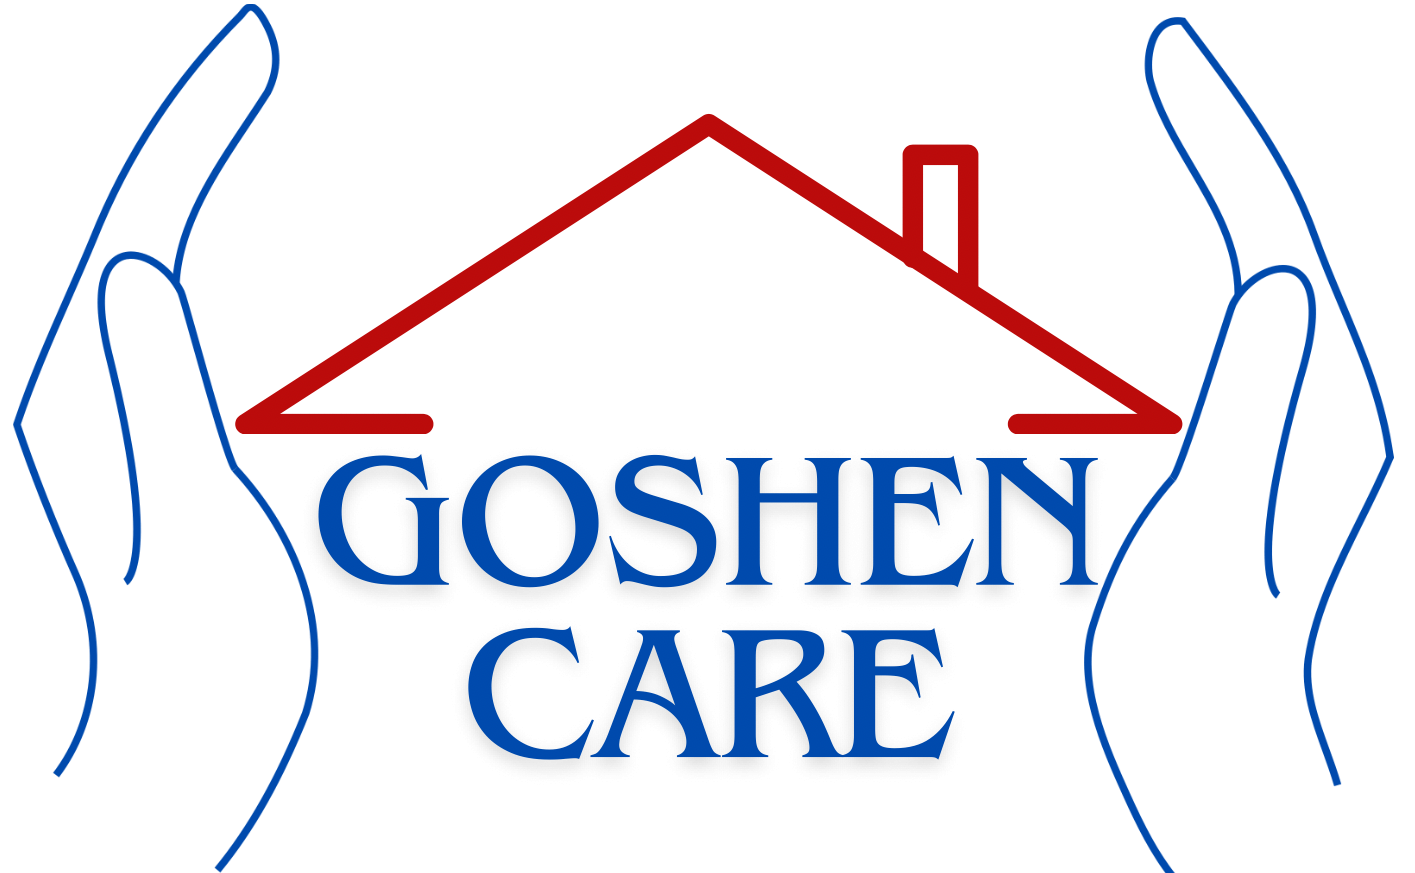 Goshen Care